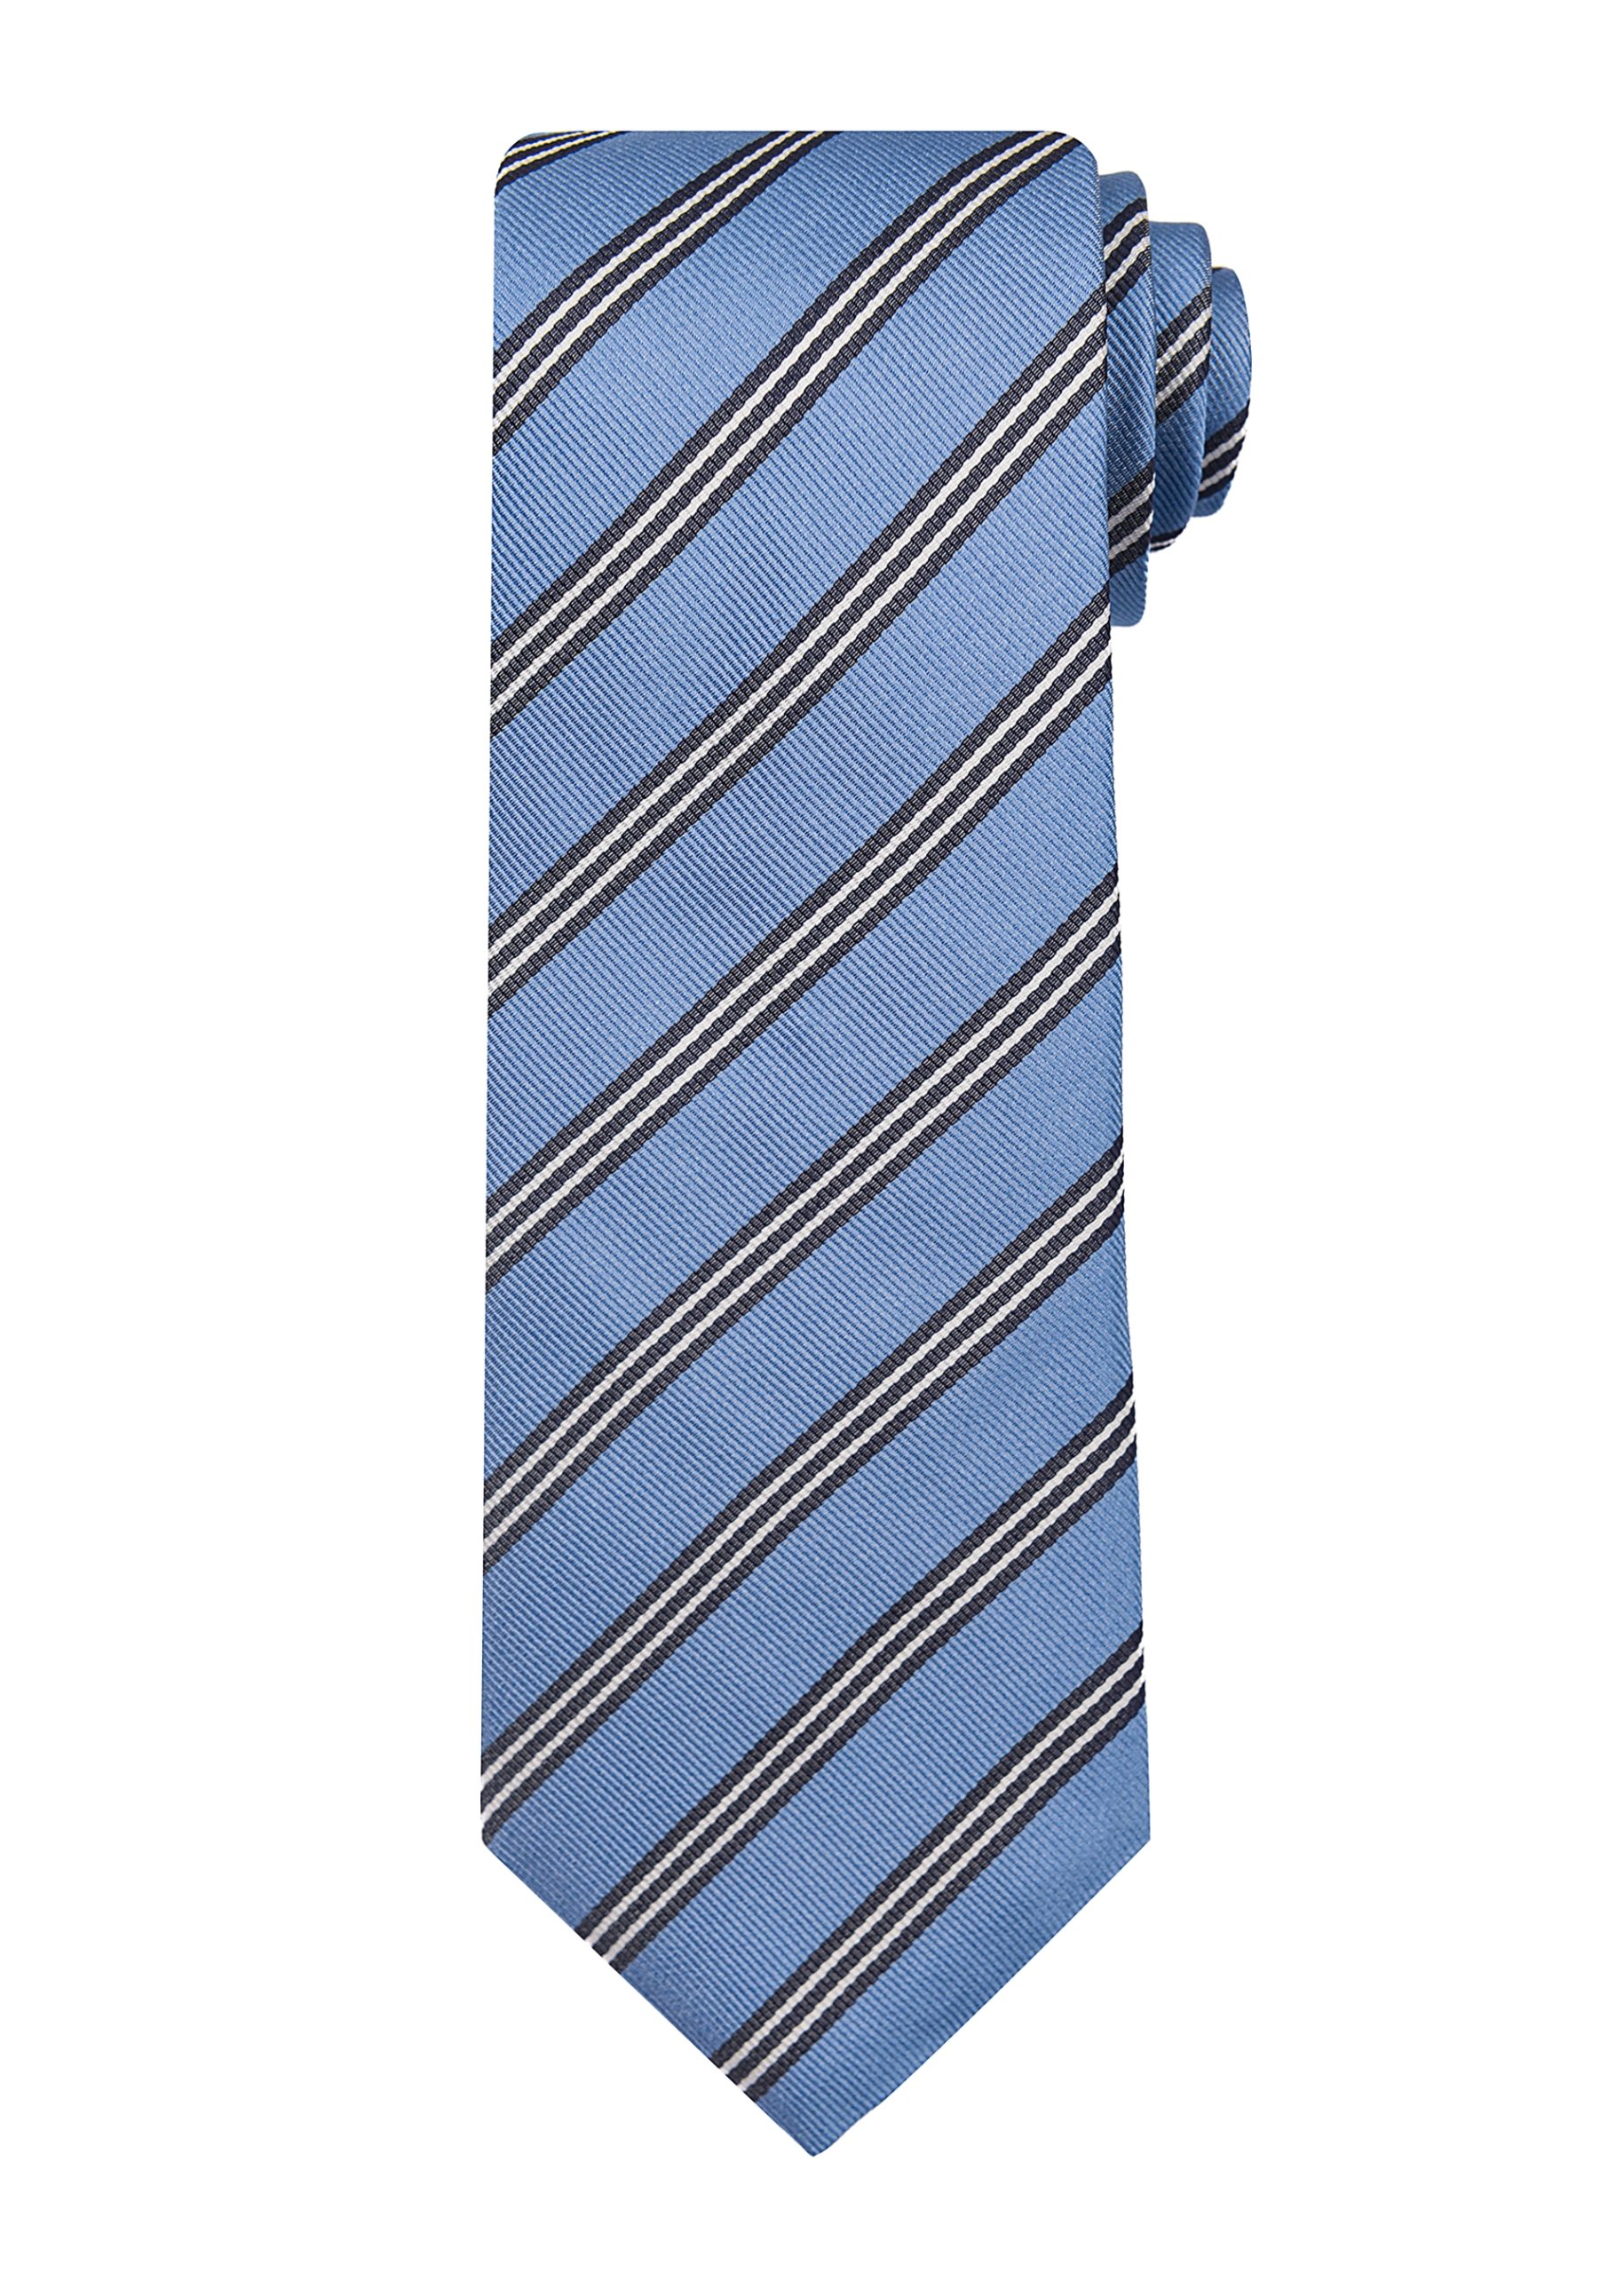 Roderick Charles sky blue tie